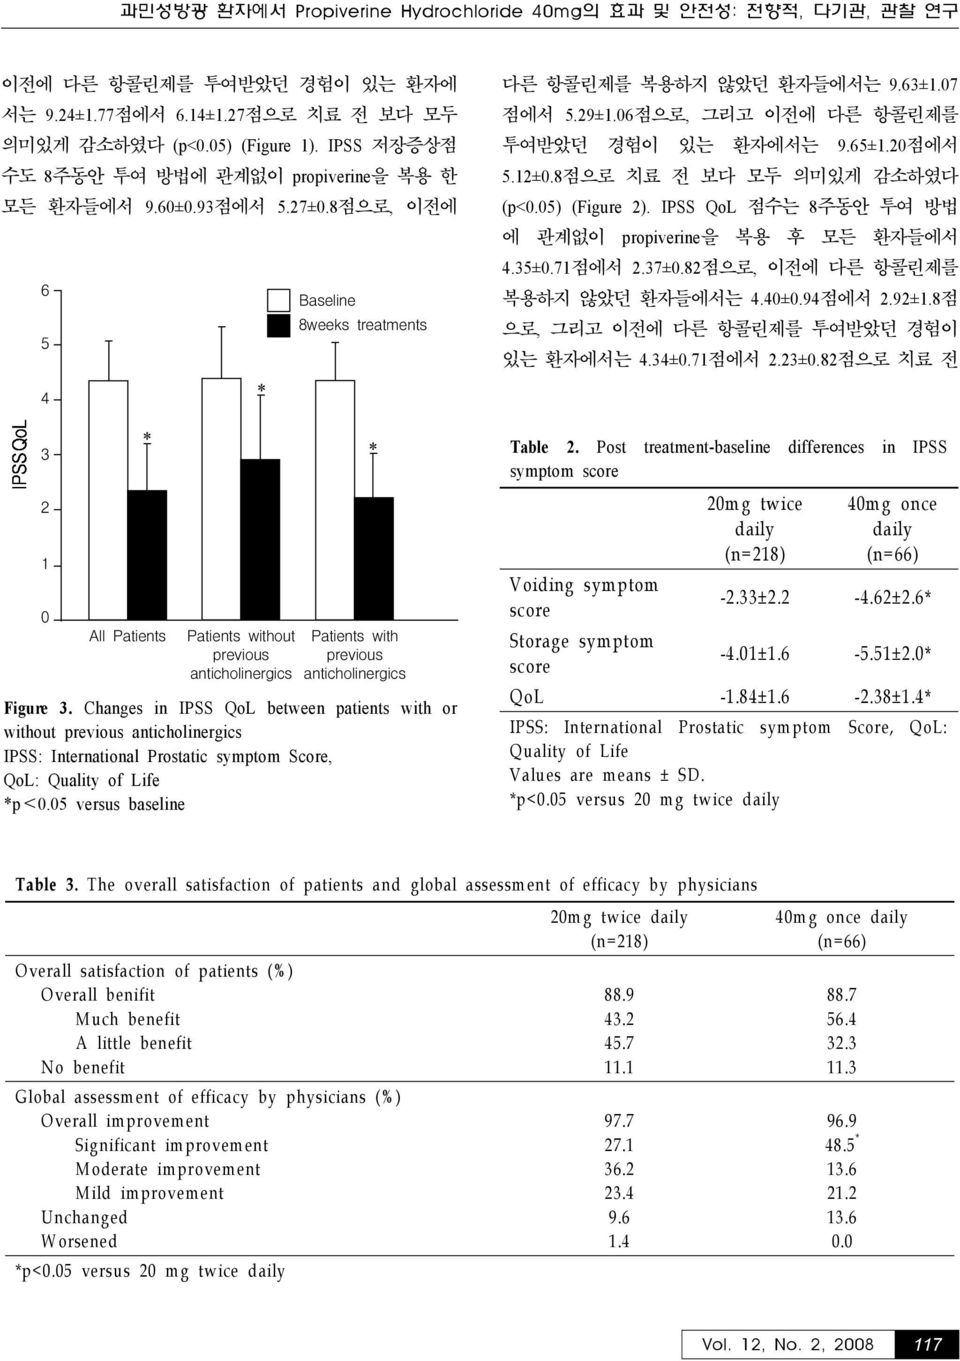 Changes in IPSS QoL between patients with or without IPSS: International Prostatic symptom Score, QoL: Quality of Life p<0.05 versus baseline 다른 항콜린제를 복용하지 않았던 환자들에서는 9.63±1.07 점에서 5.29±1.